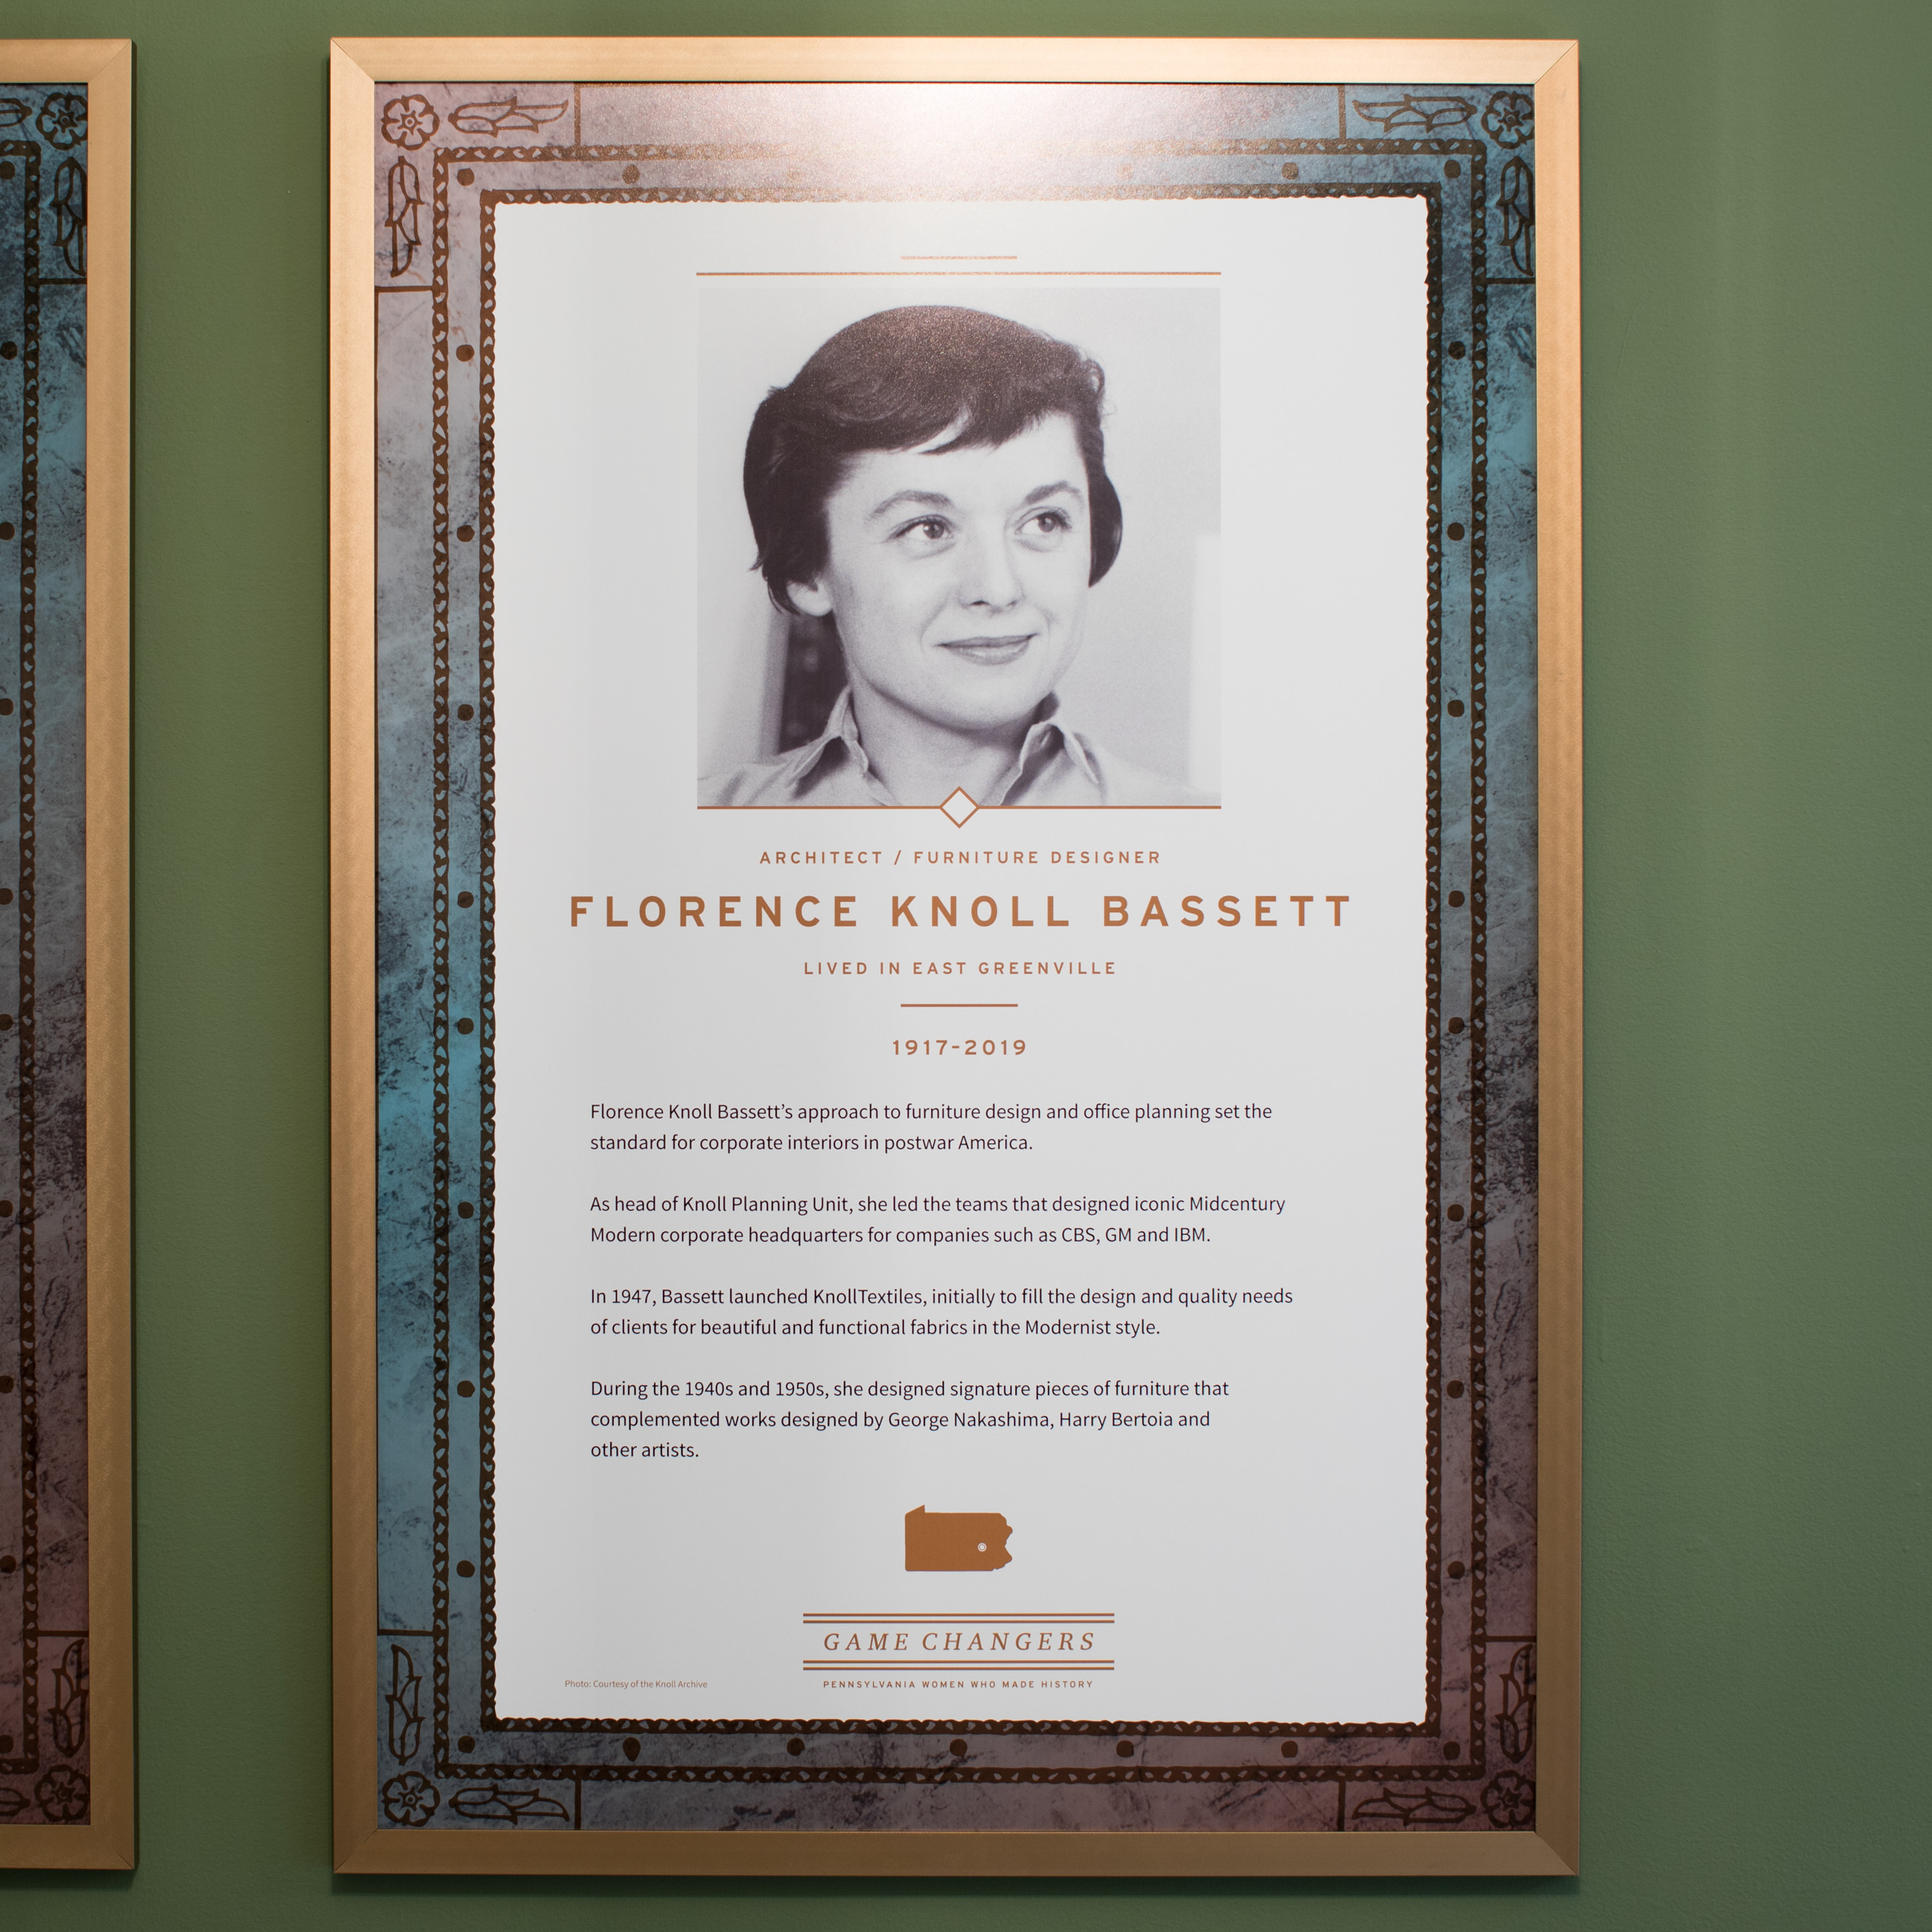 Pannello dedicato a Florence Knoll all'interno dell'esposizione Game Changers: Pennsylvania Women Who Made History.